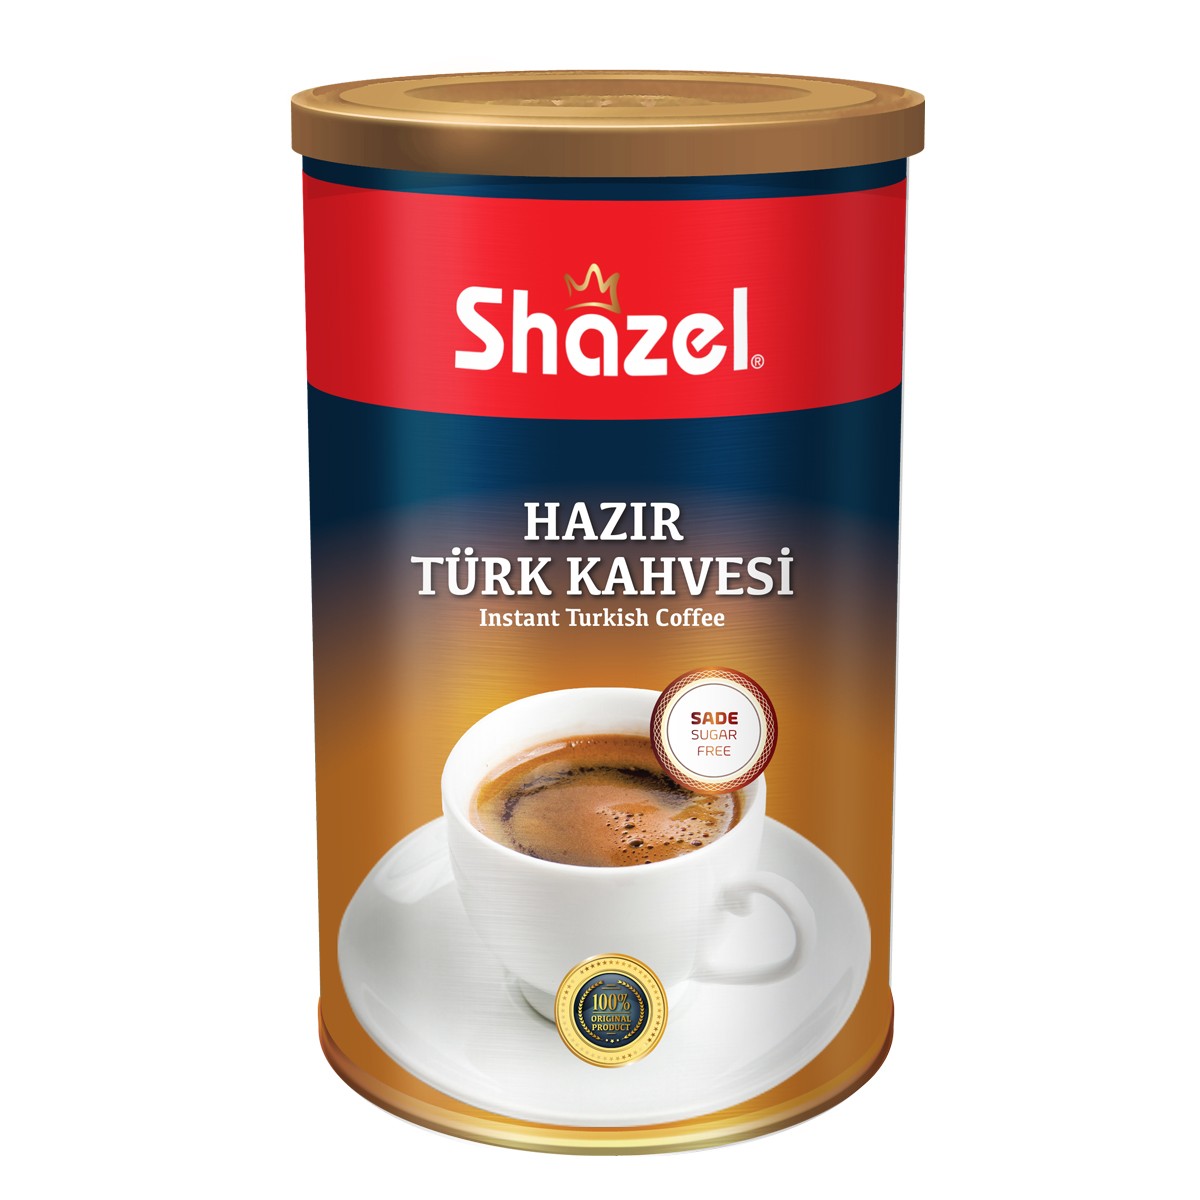 Hazır Türk Kahvesi Sade 500 g teneke x 6 adet